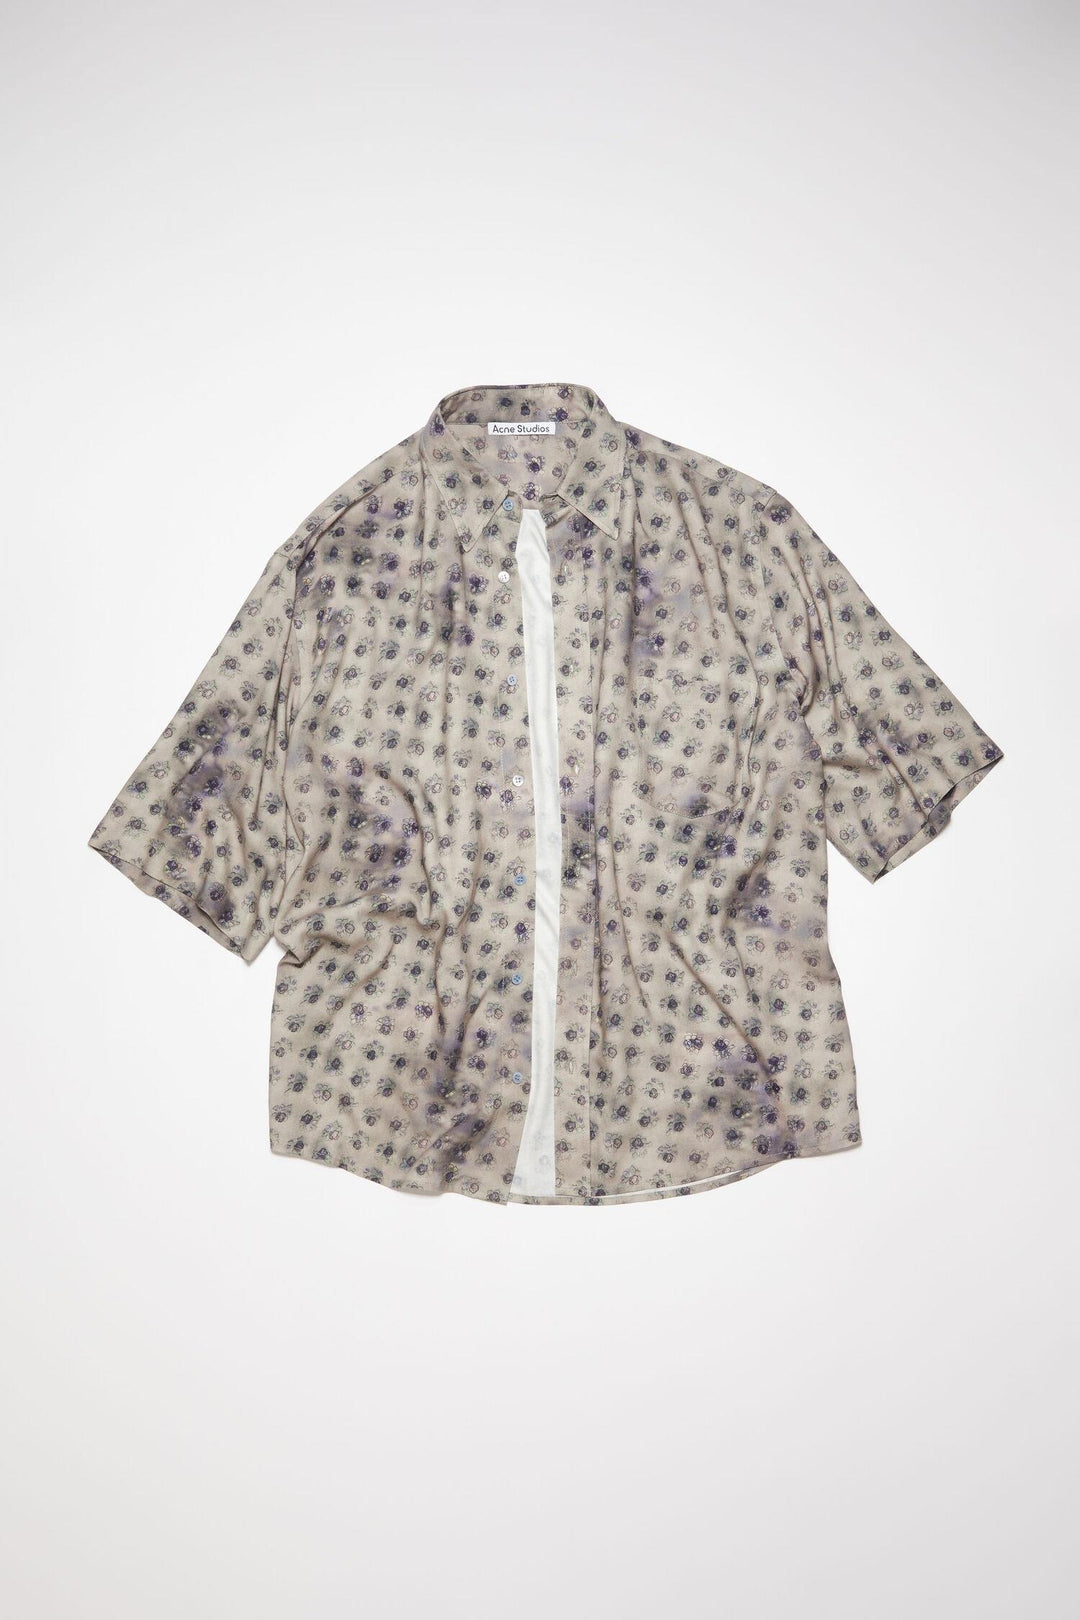 ACNE STUDIOS - Short Sleeve Button-Up Shirt - GREY/DARK BLUE - Dale